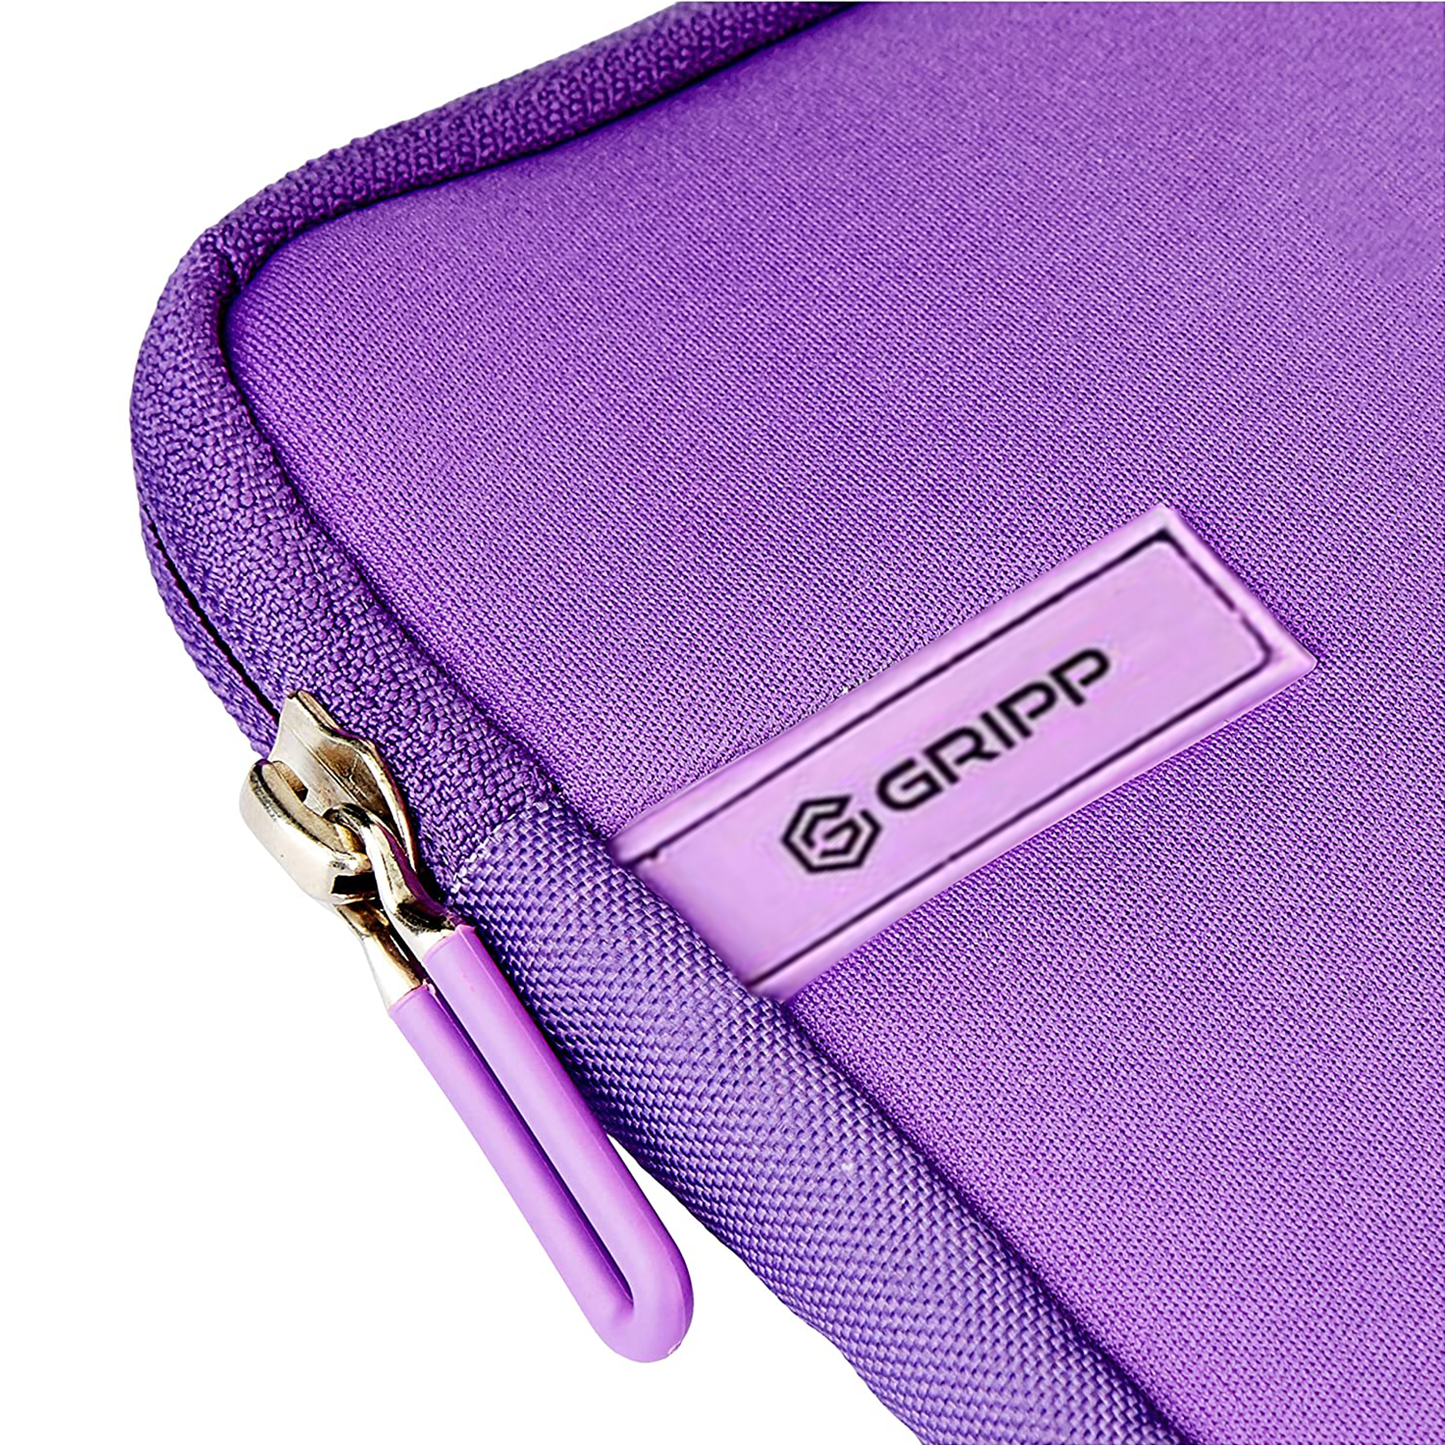 Gripp Aero Sleeve For Laptop 14" - Purple